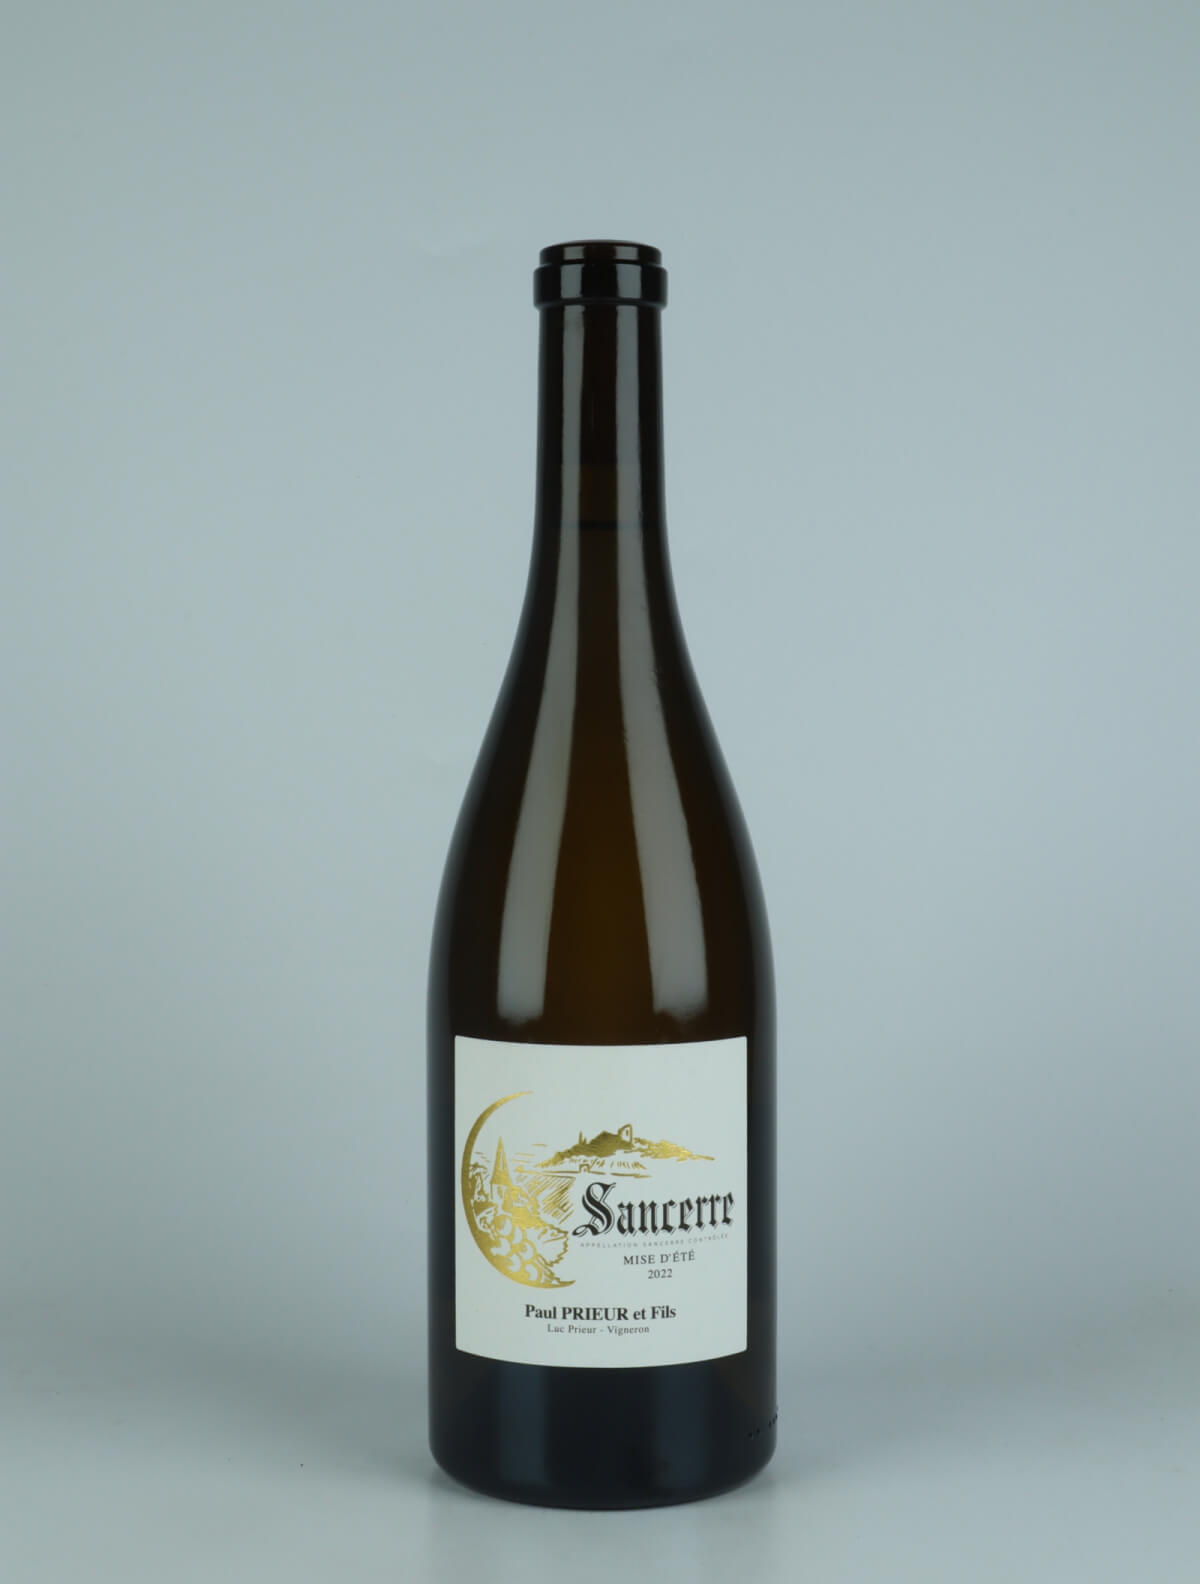 A bottle 2022 Sancerre White wine from Paul Prieur et Fils, Loire in France